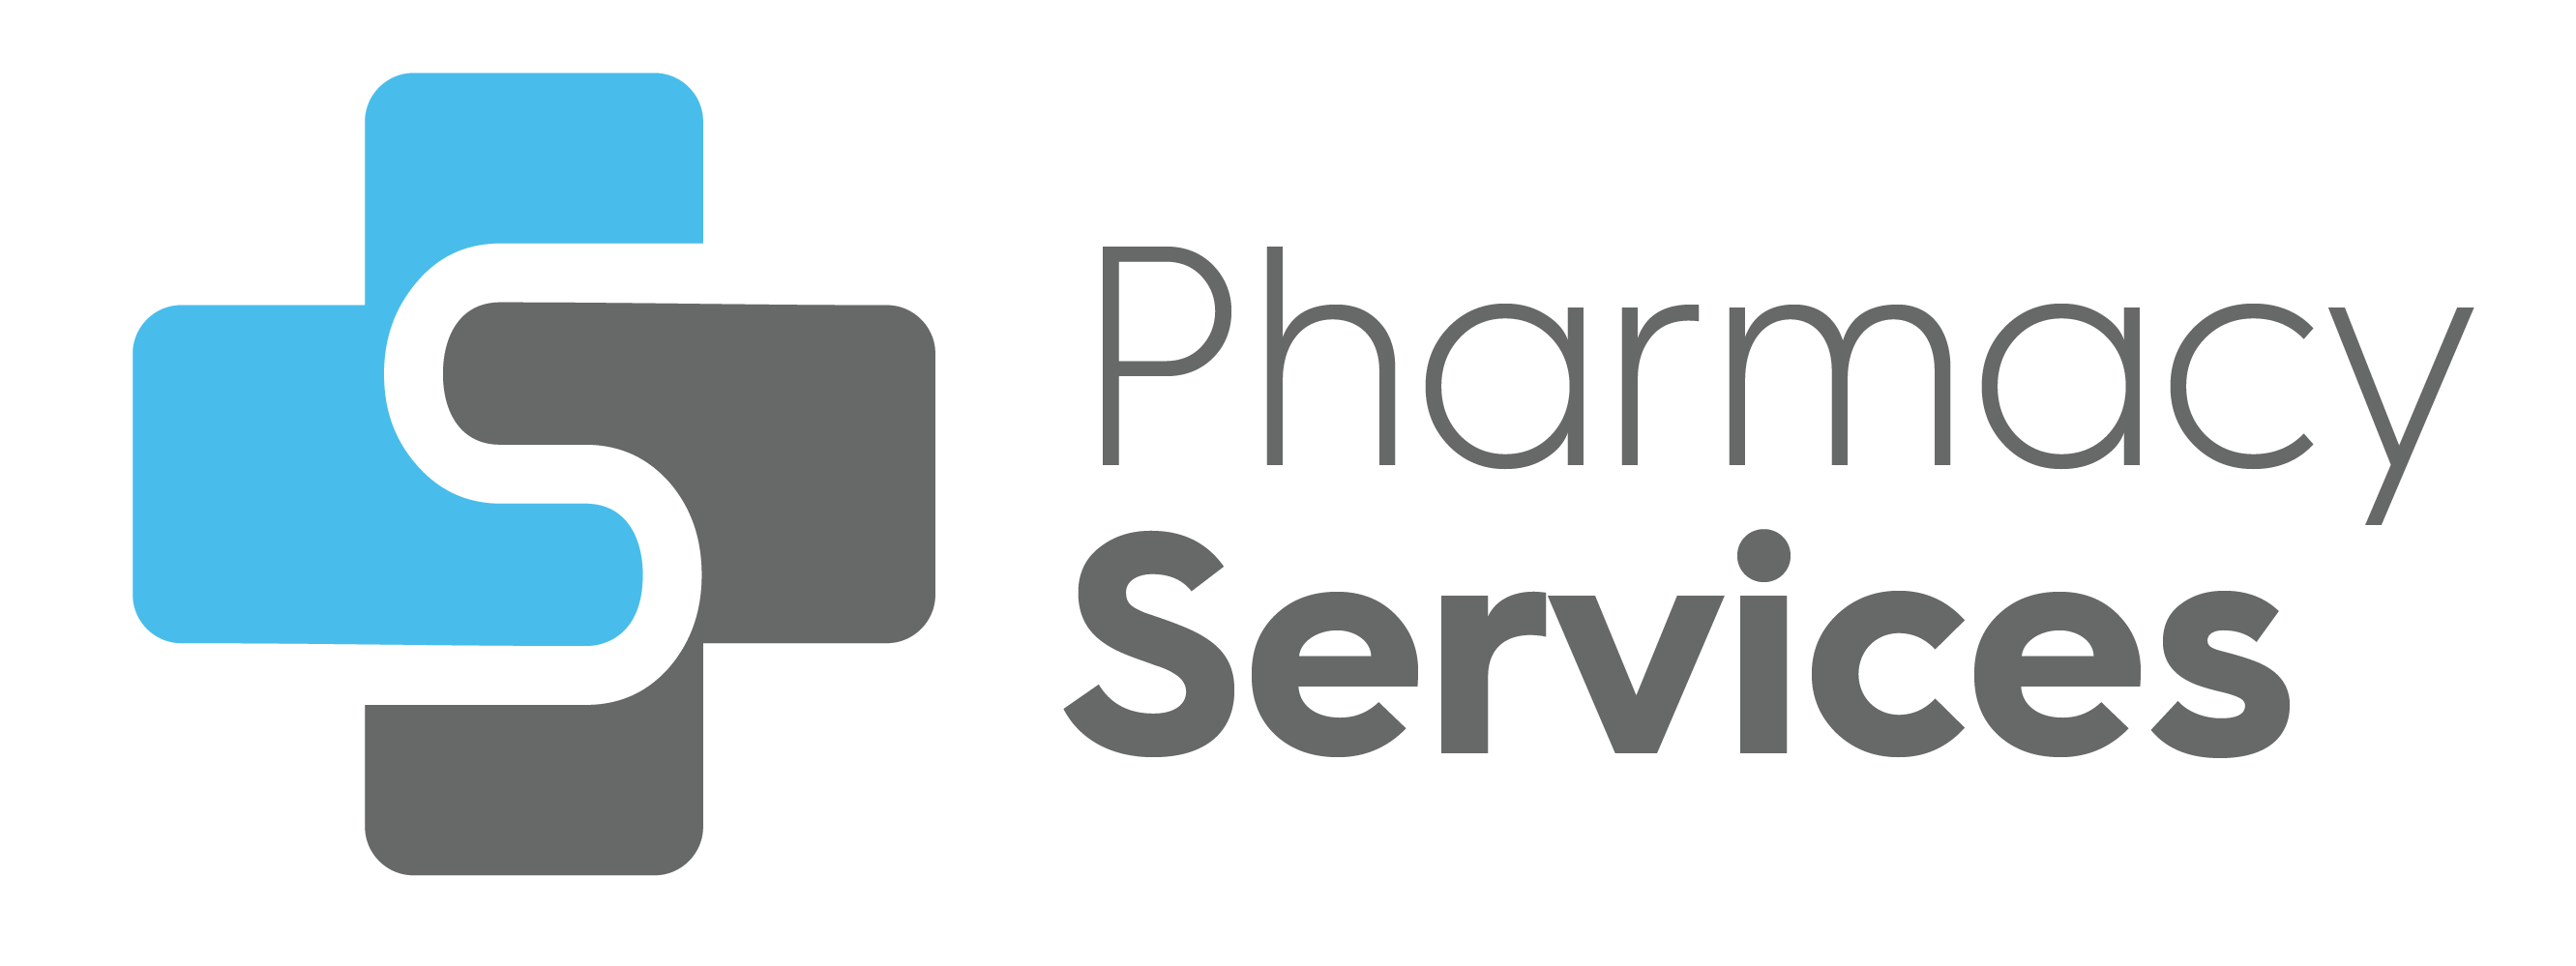 CHS_Pharmacy Services logo-3